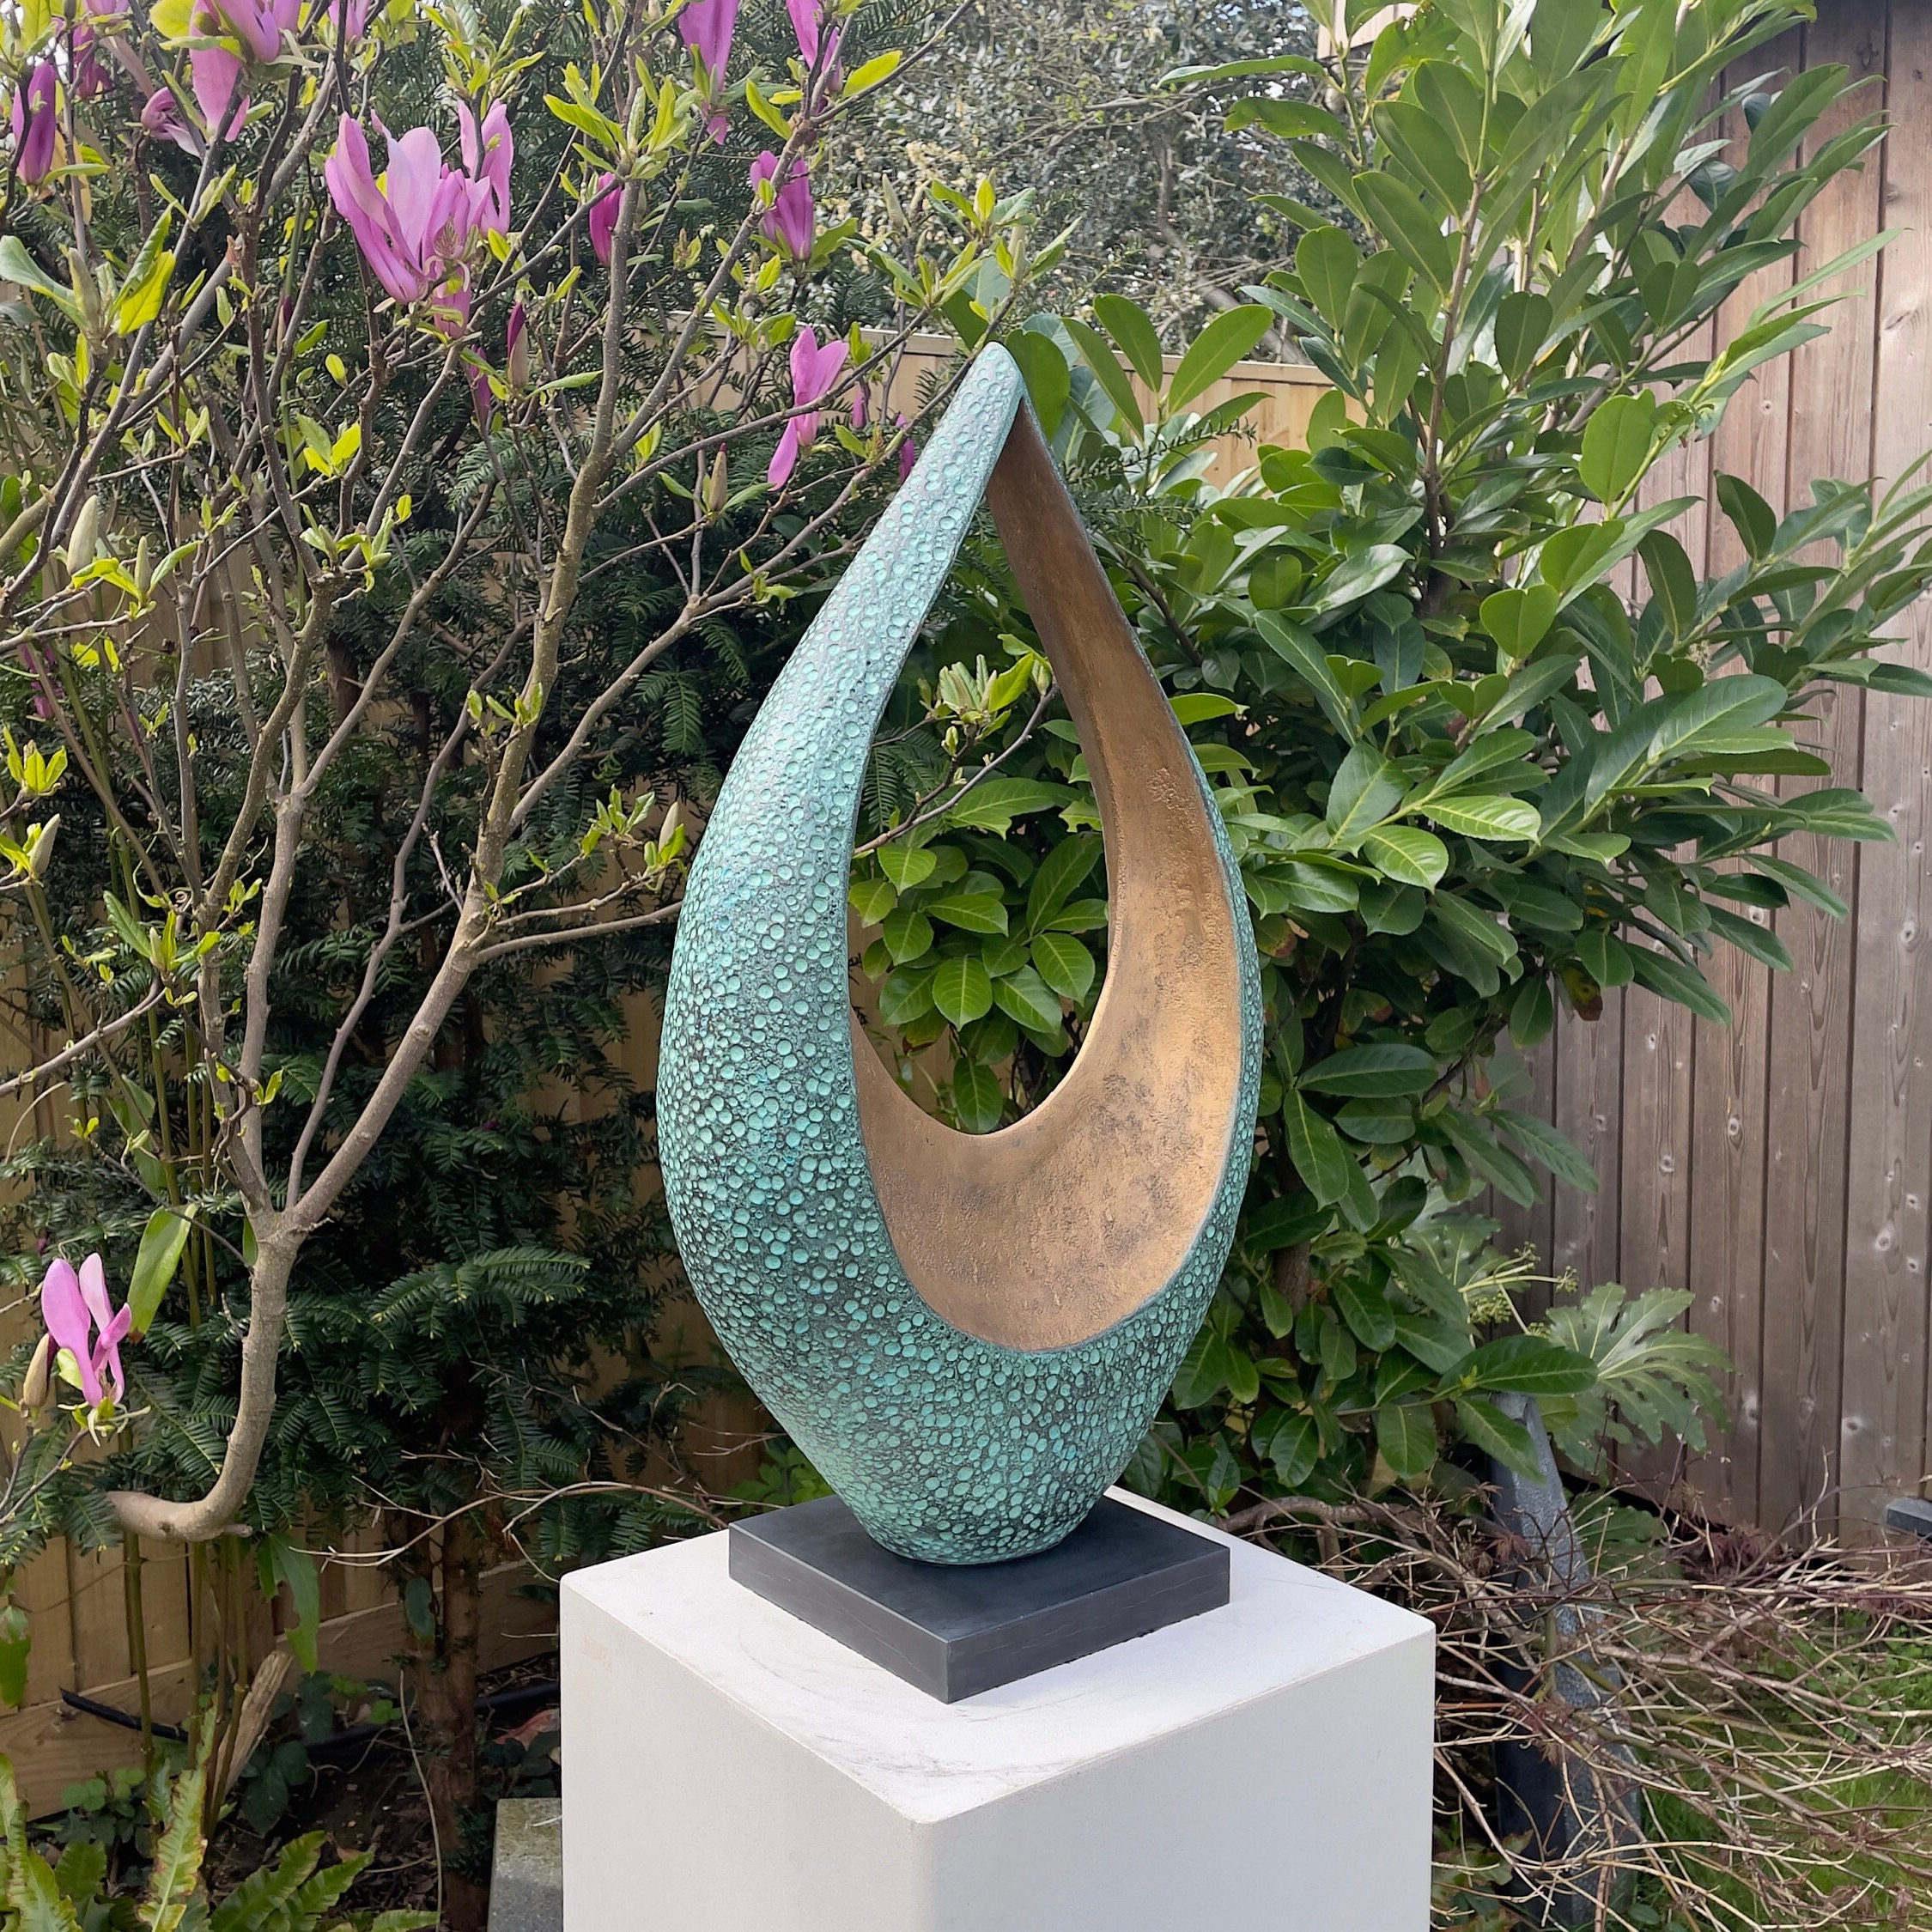 Sample garden sculptures